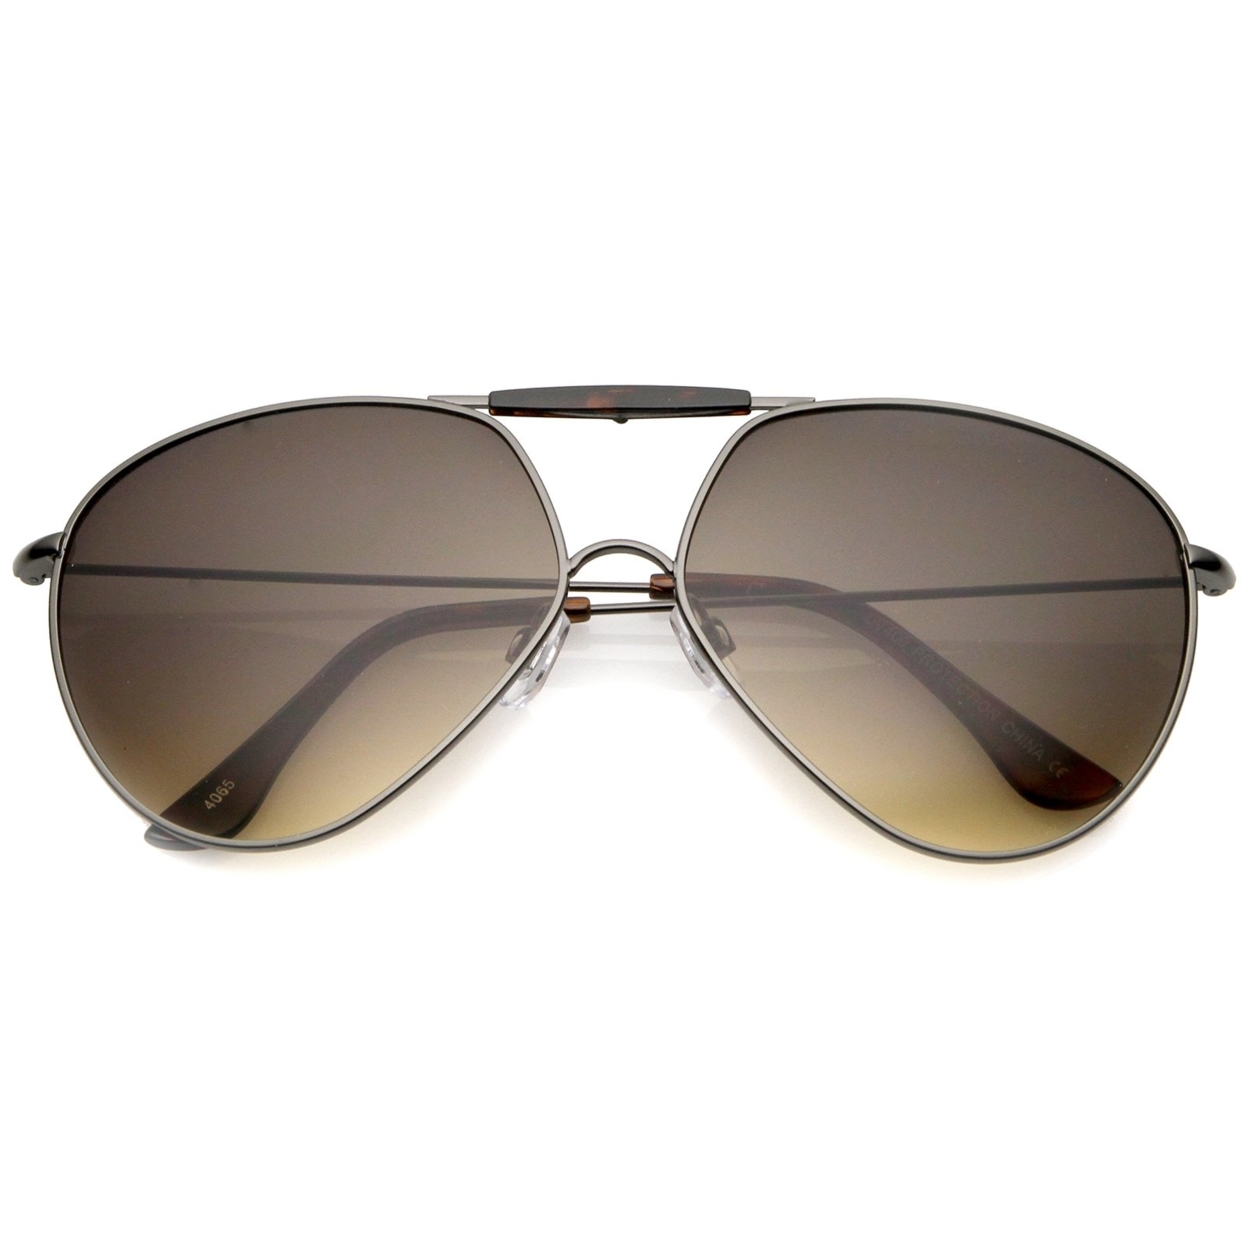 Casual Brow Bar Detail Slim Temple Metal Frame Aviator Sunglasses 62mm - Gold-Tortoise / Amber